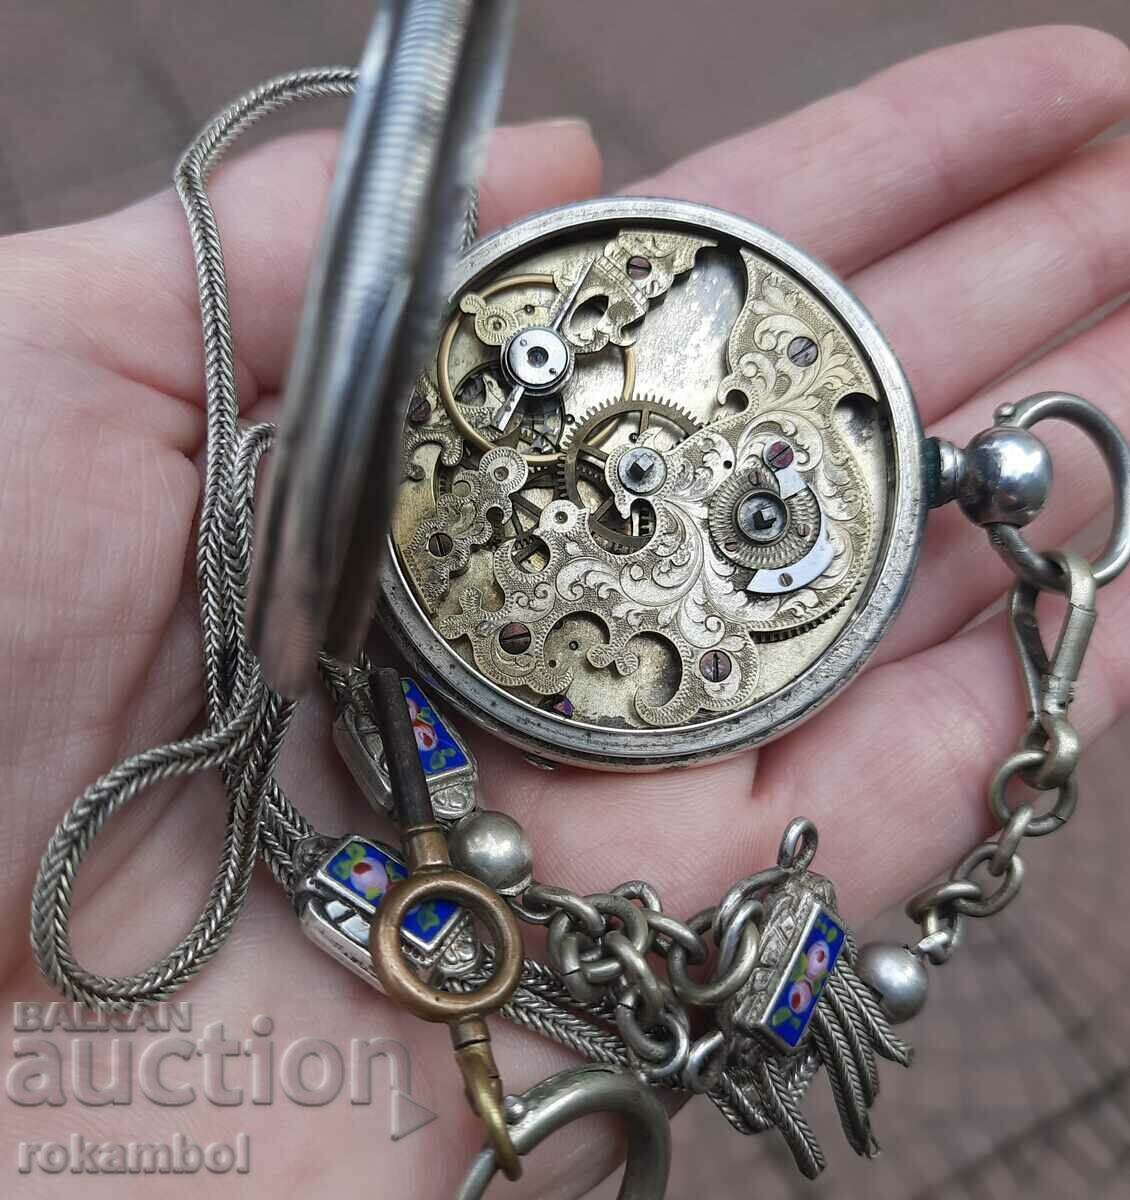 Swiss silver pocket watch Skeleton Gothic1850